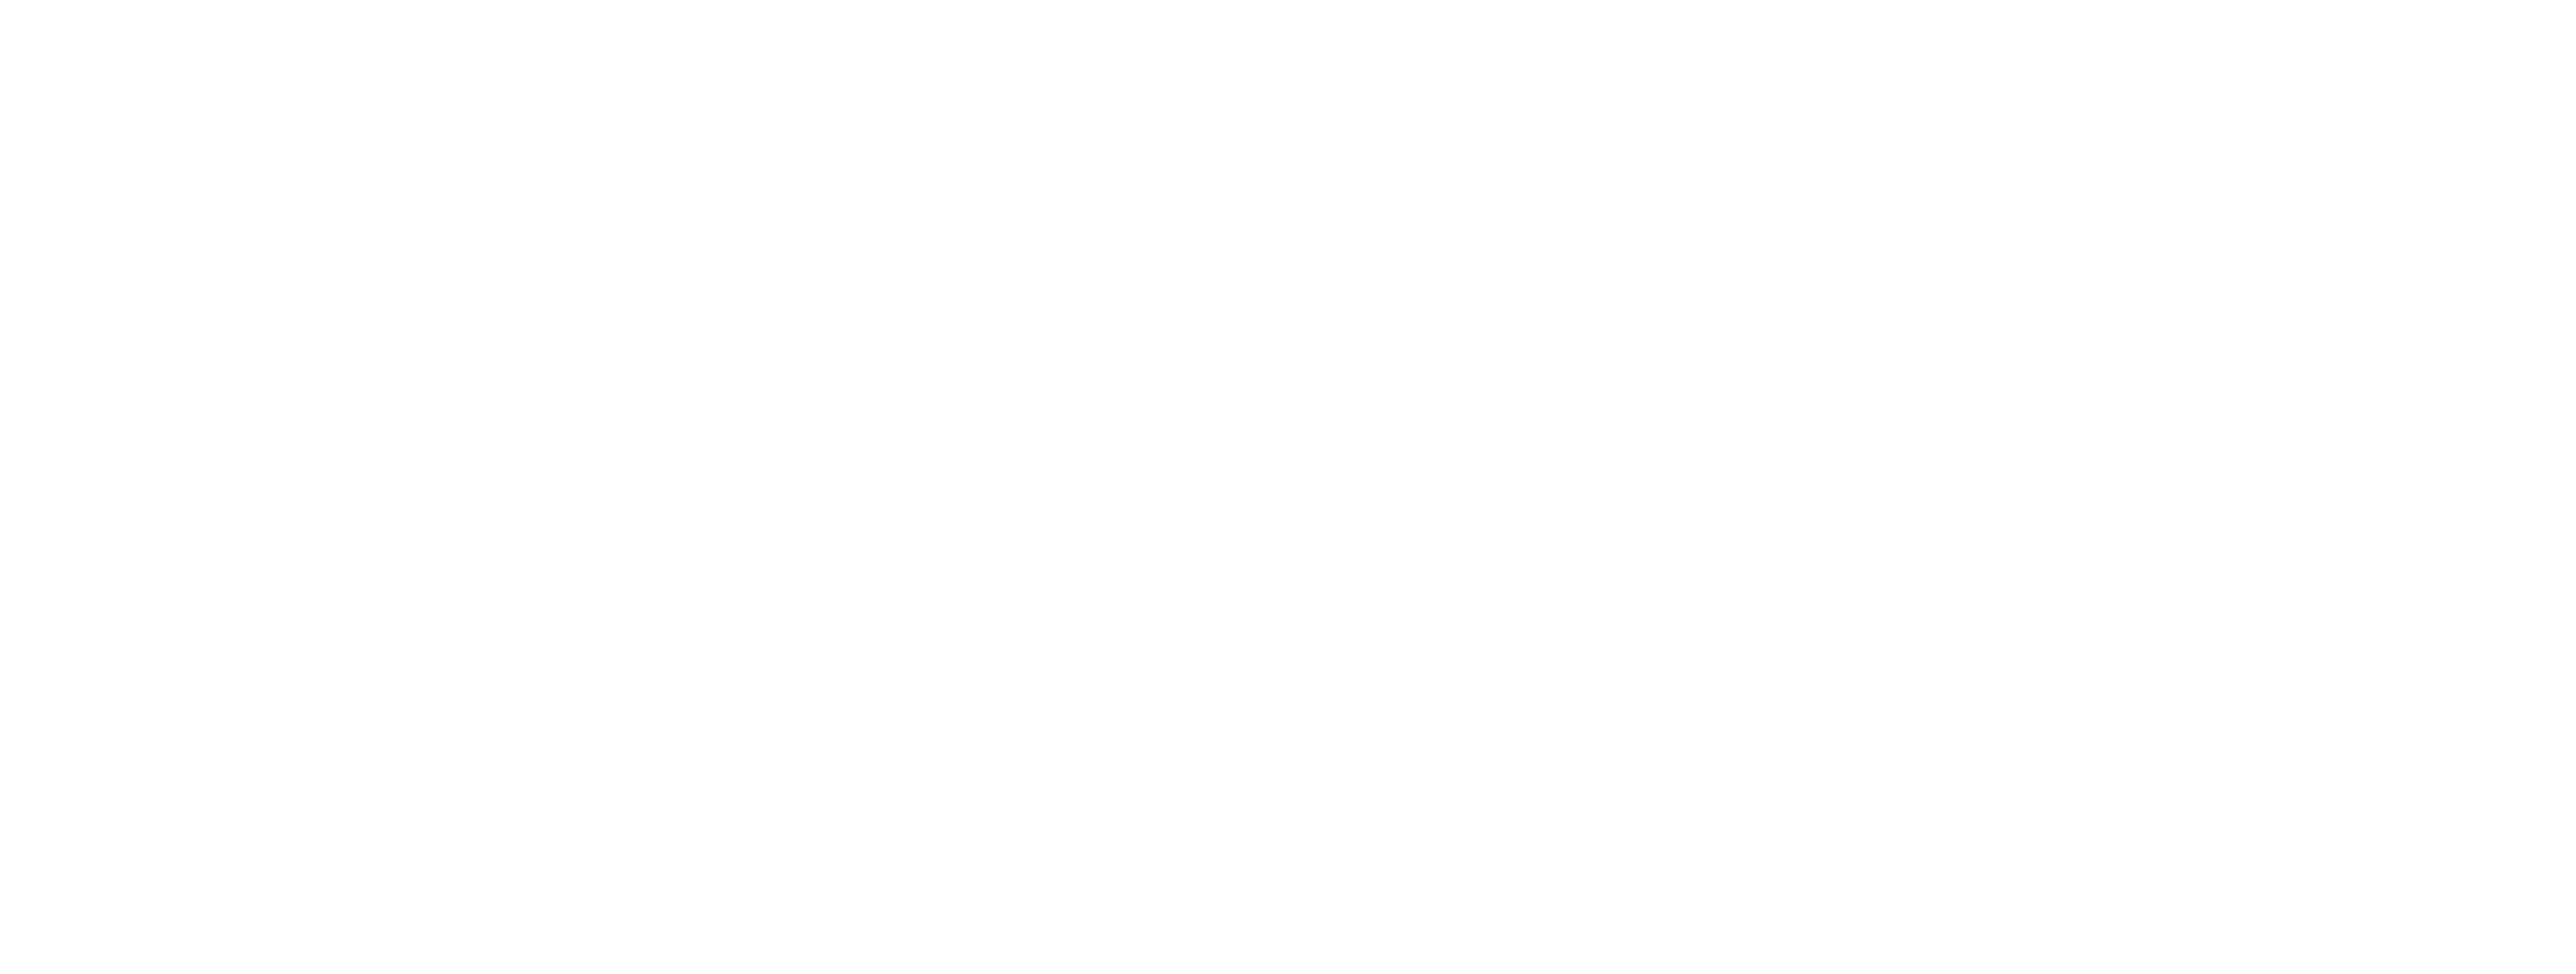 MODERN HOMES PORTLAND LOGO